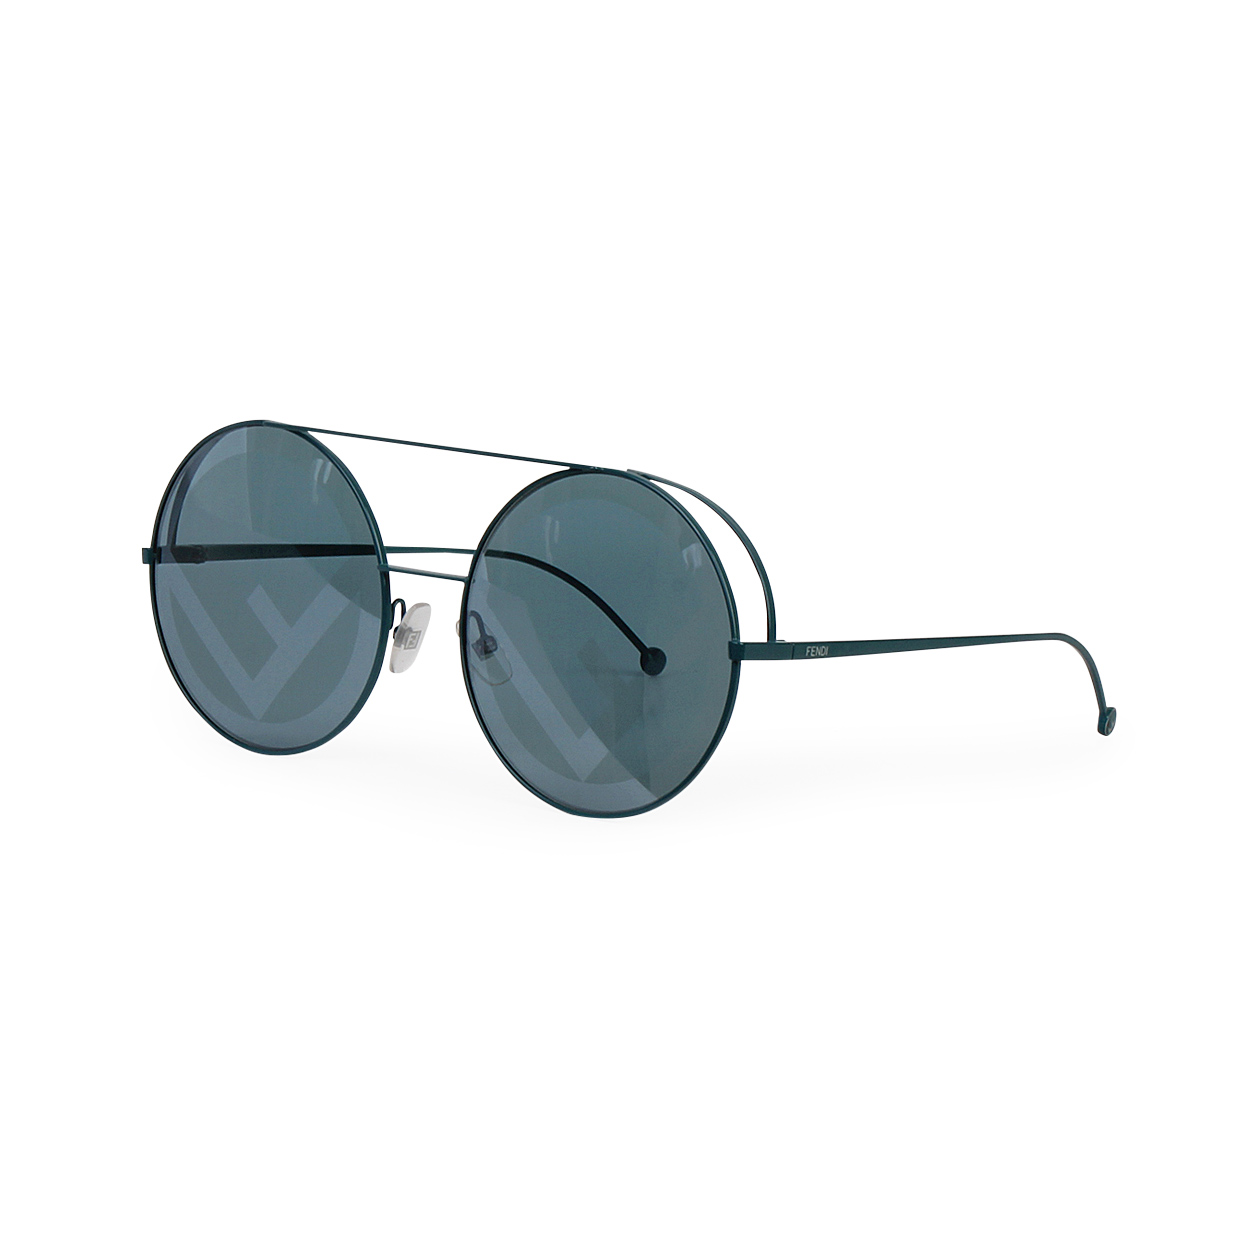 https://luxity.co.za/wp-content/uploads/2019/11/FENDI-Fendirama-Round-Sunglasses-FF0285S-Blue-angle.jpg